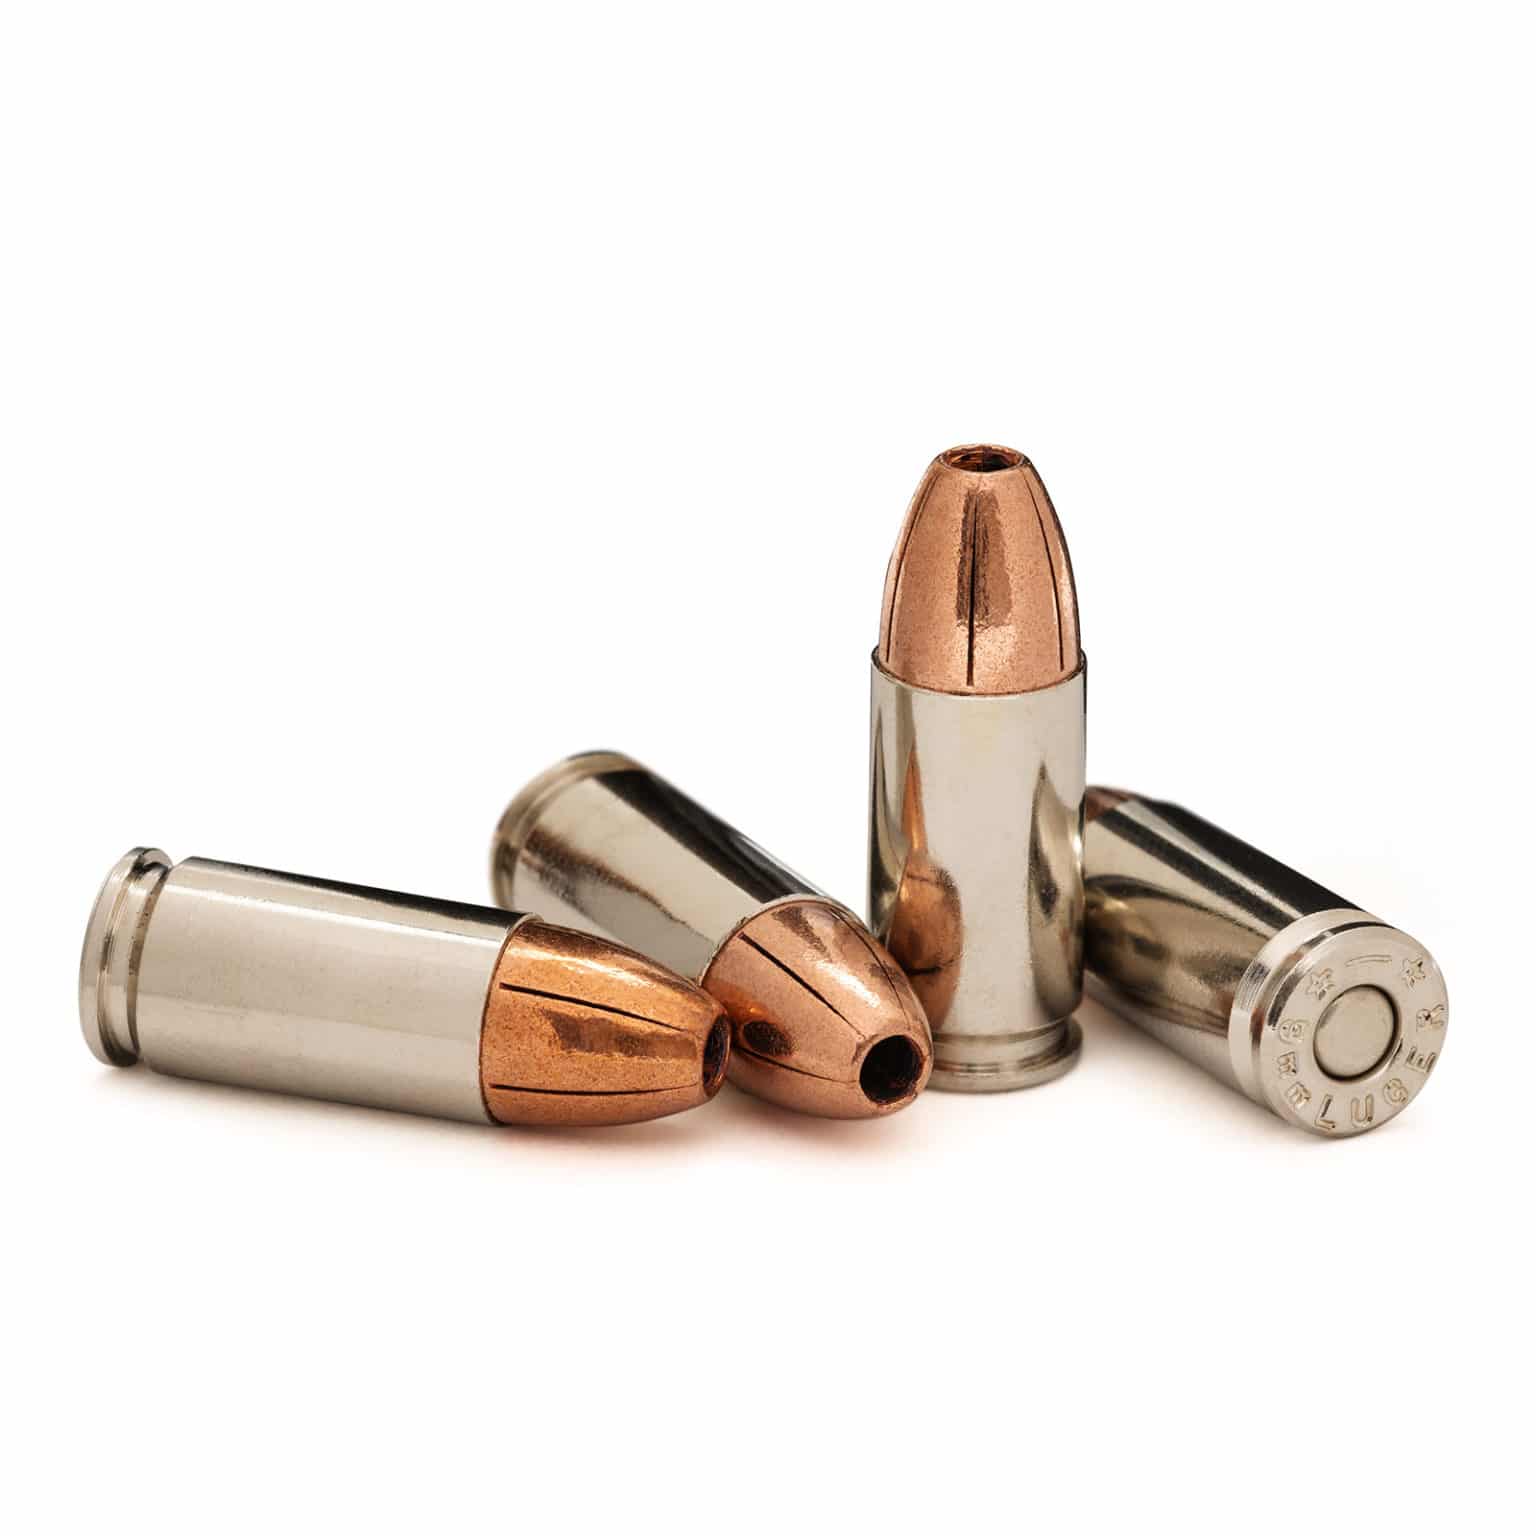 Picture of handgun ammo